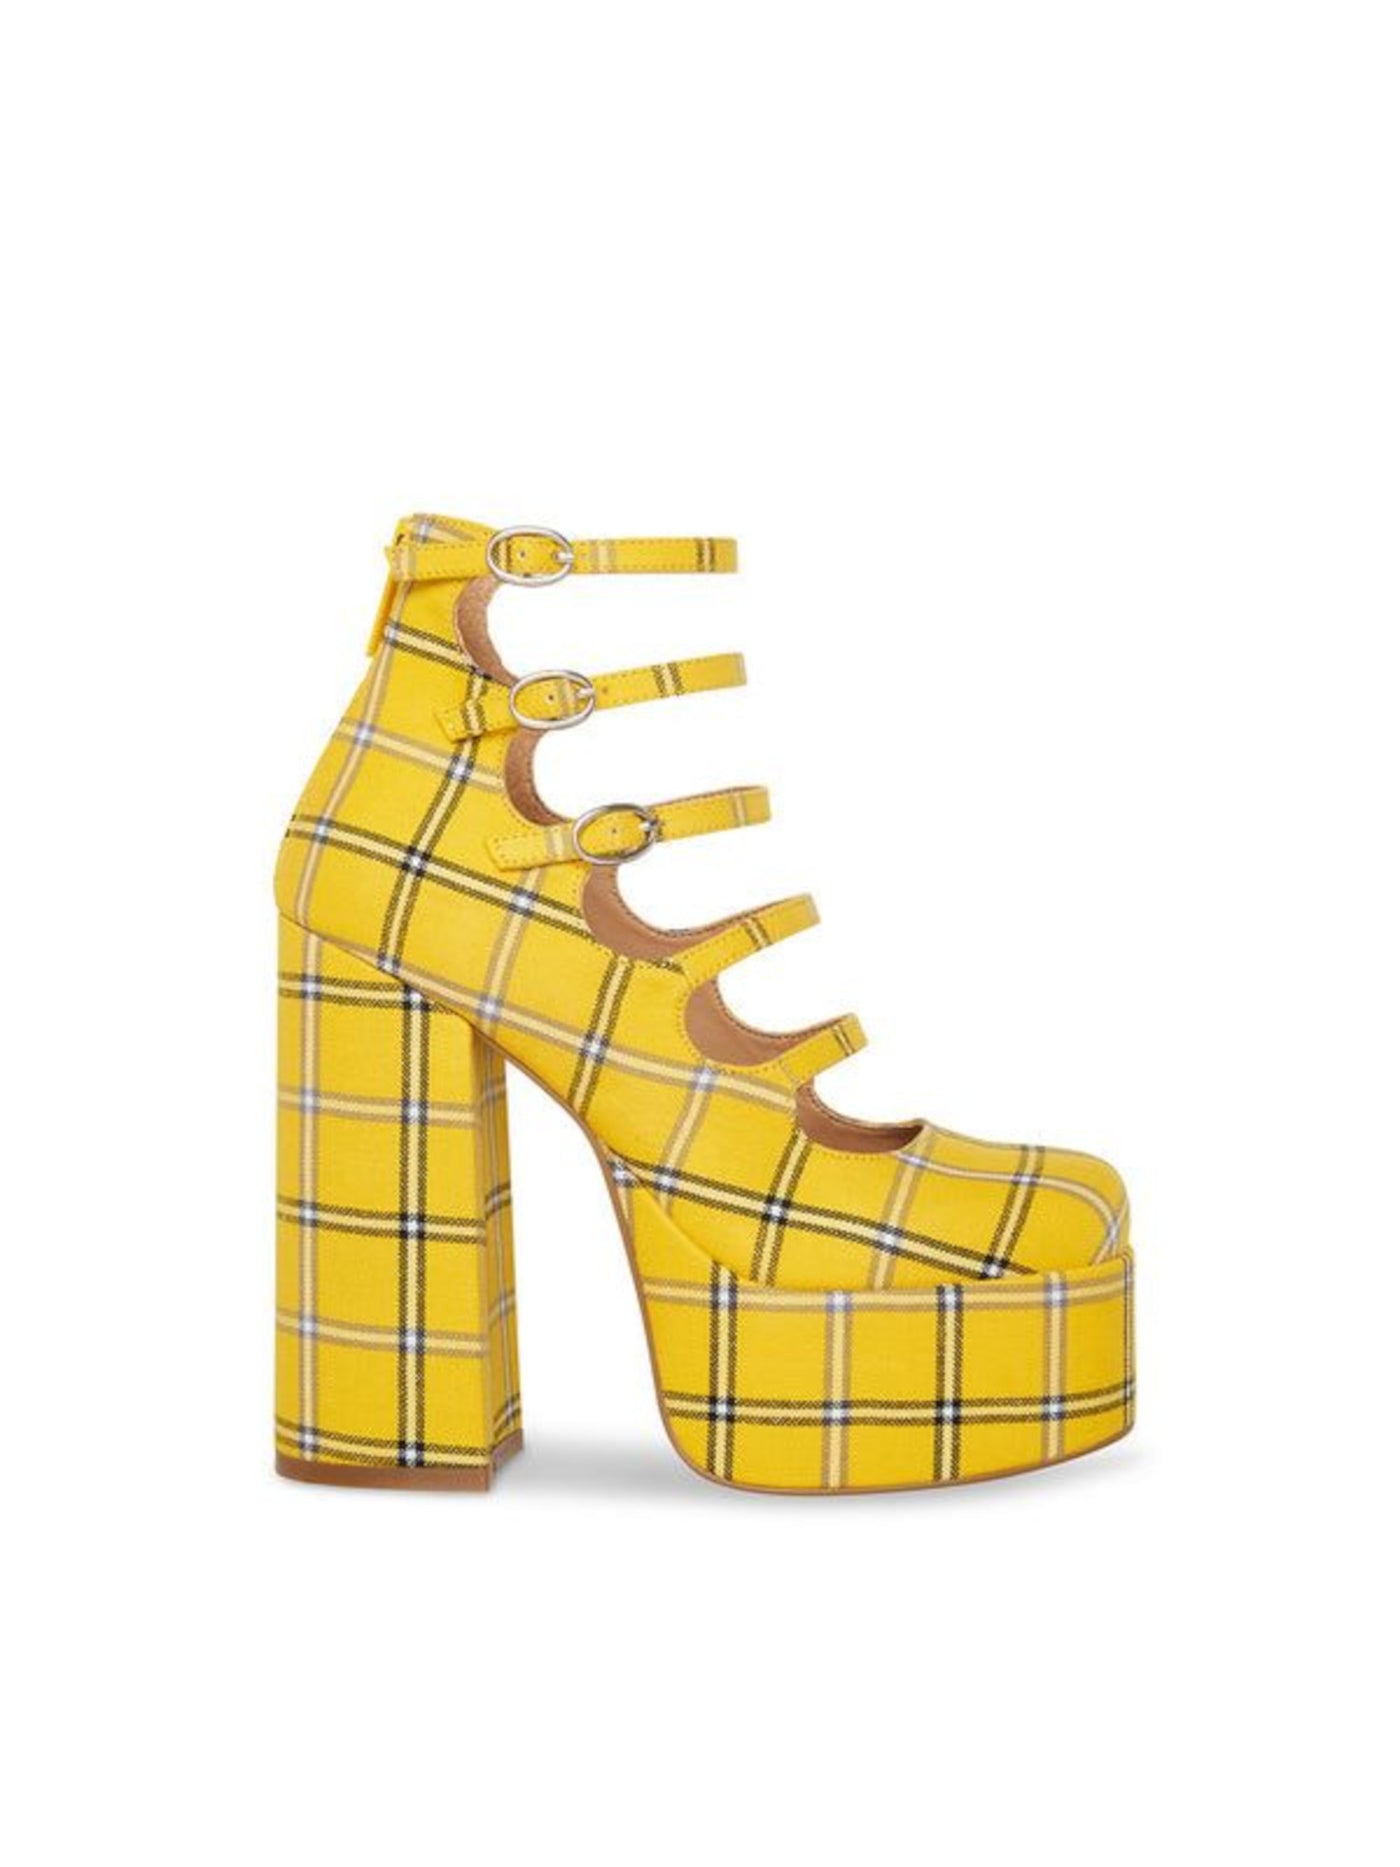 STEVE MADDEN Womens Yellow Plaid 3" Platform Adjustable Round Toe Block Heel Zip-Up Dress Pumps Shoes 9.5 M